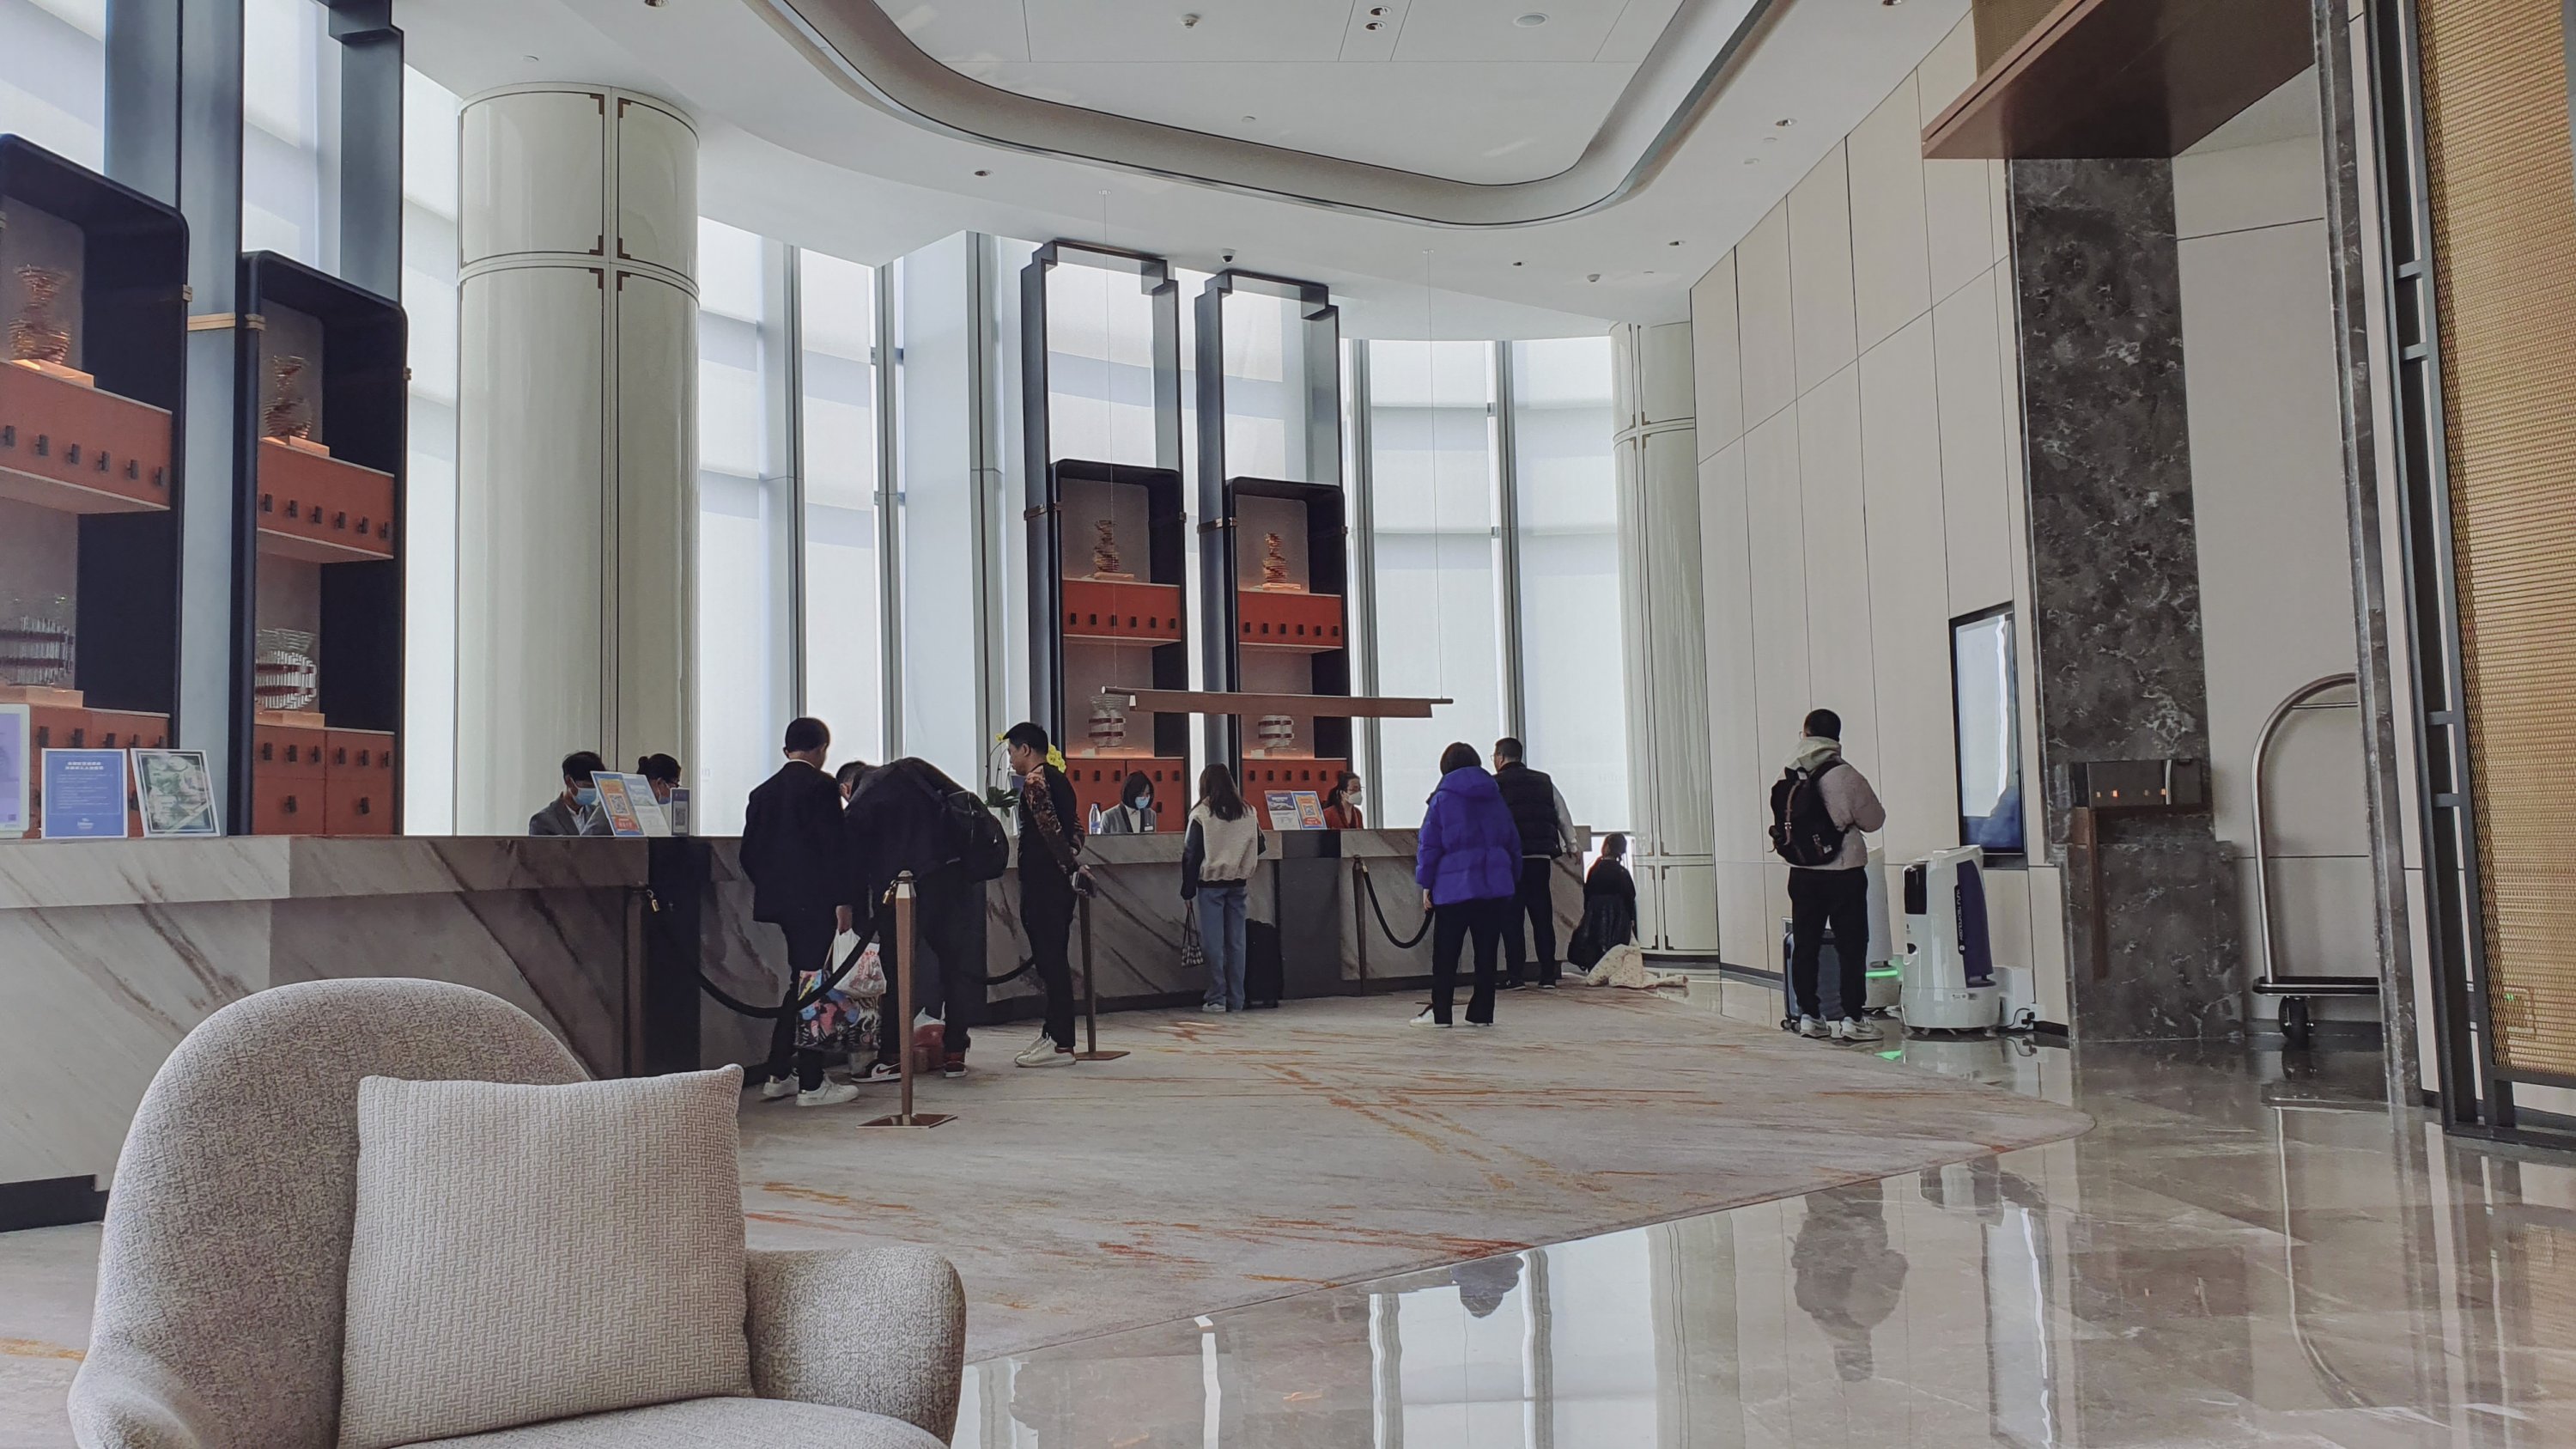 ɳïϣپƵ|Hilton Changsha Riverside